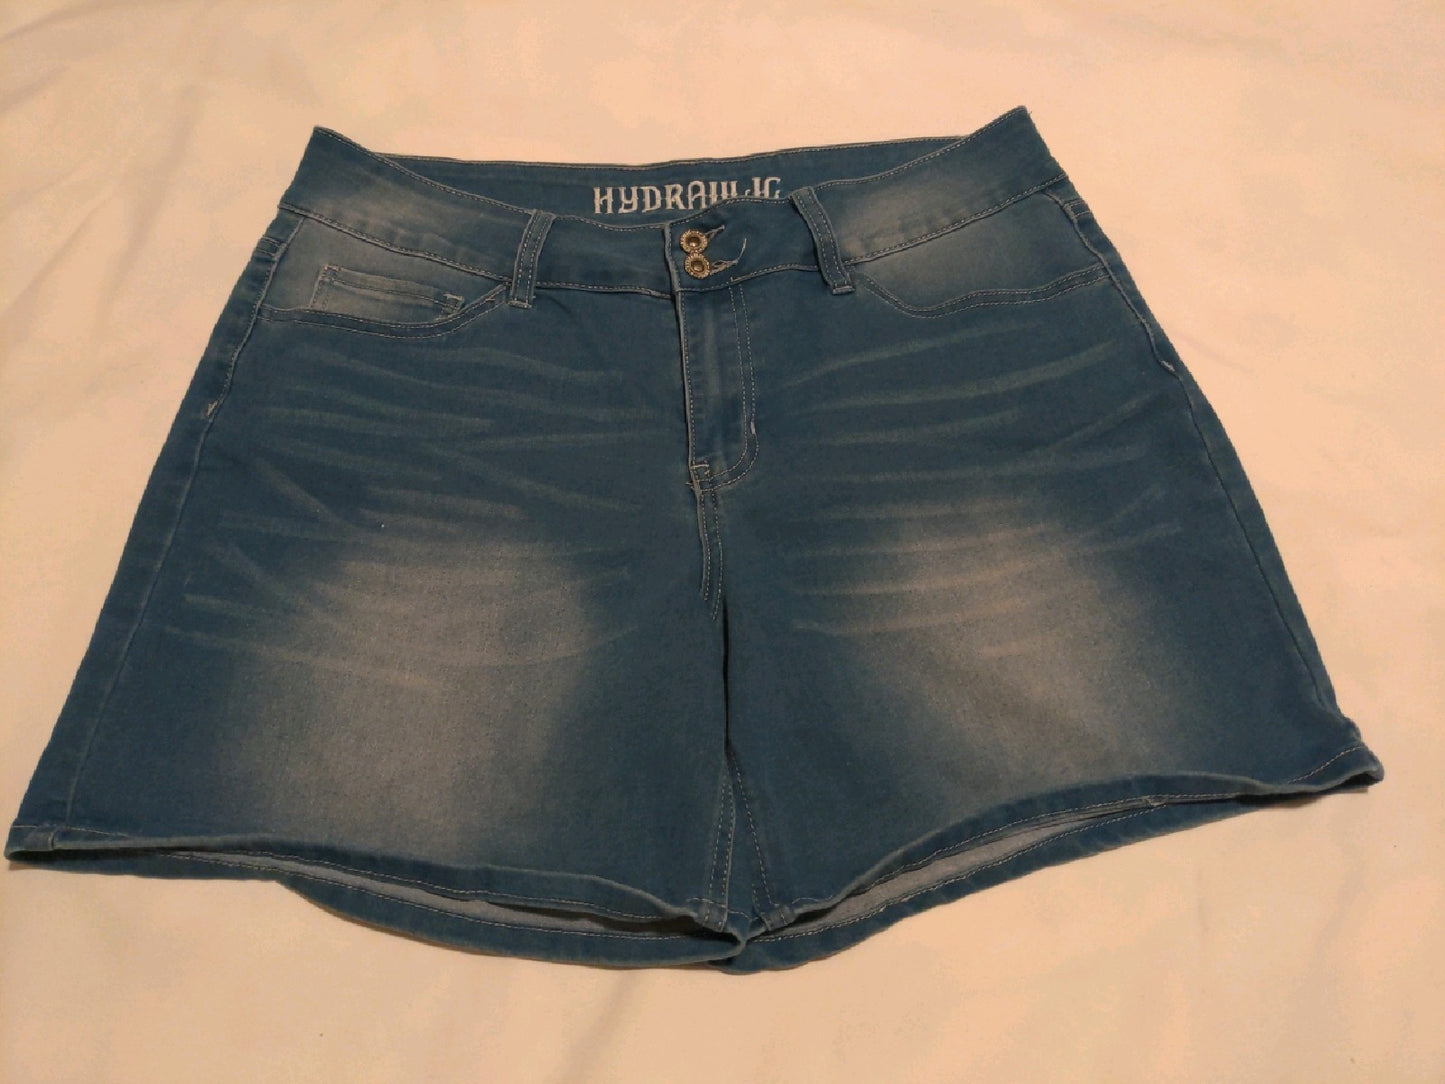 16 Hydraulic Womens Shorts Light blue slate fade double button zipper Plus  Used